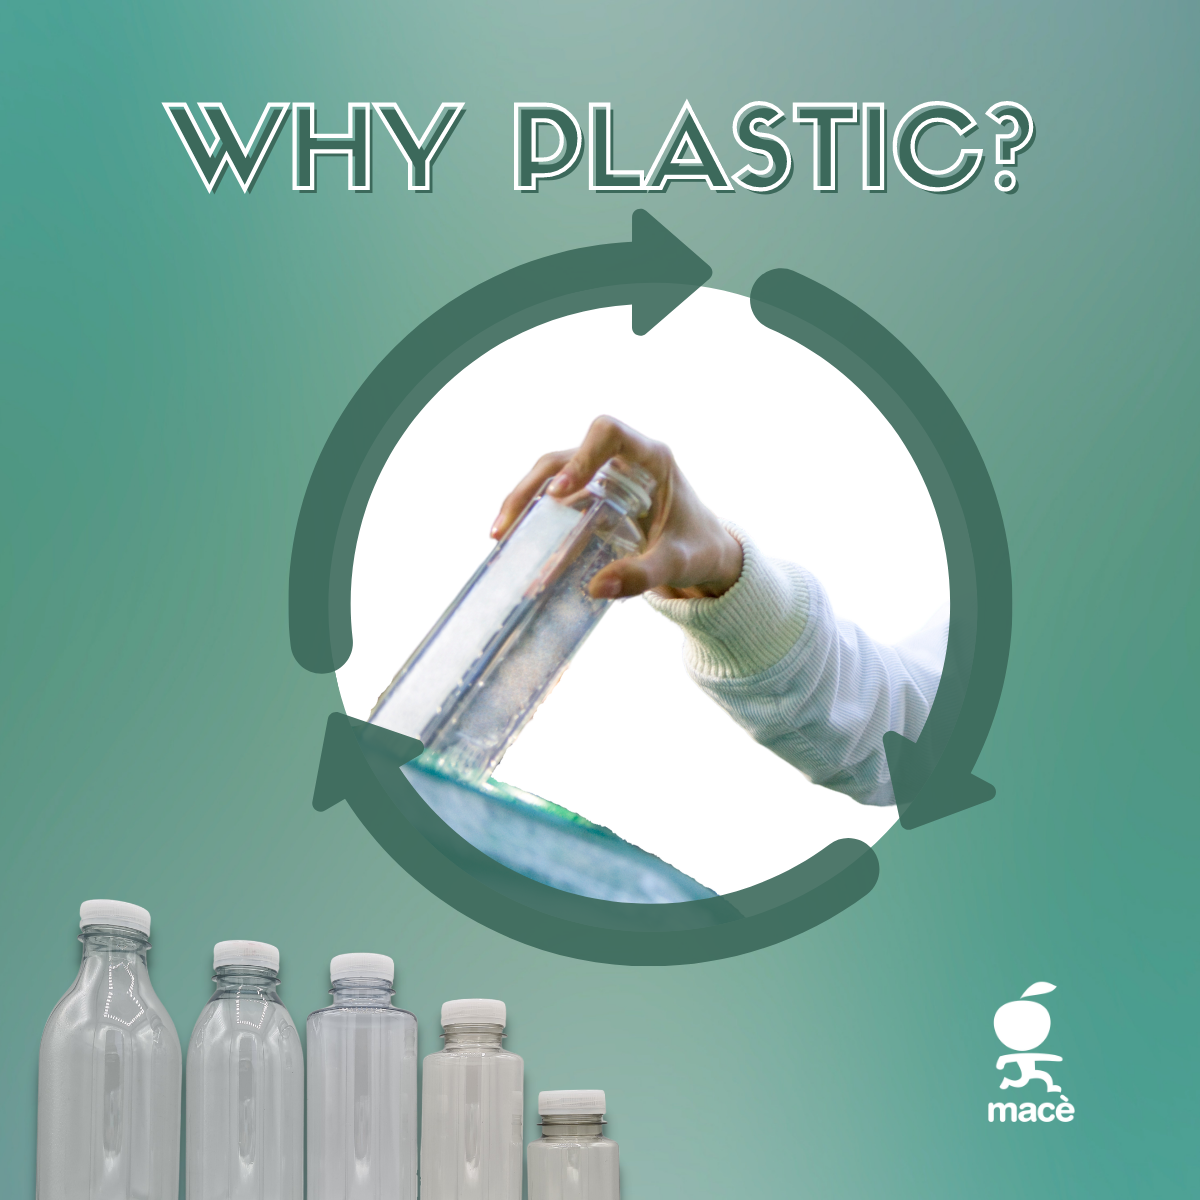 Why do we use plastic bottles?